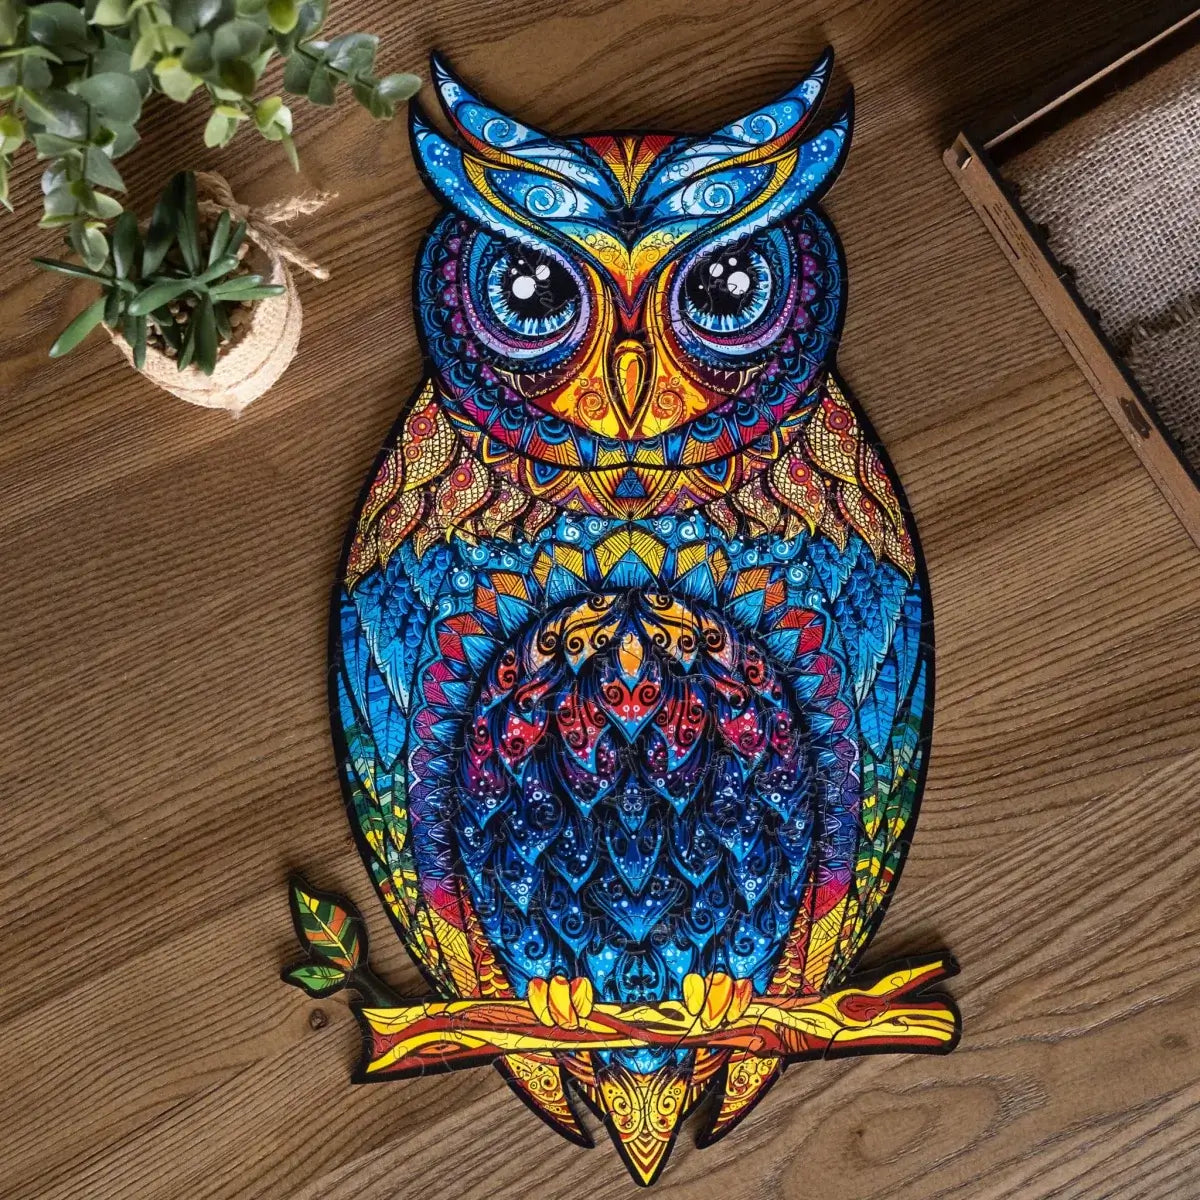 Unidragon Wooden Puzzel Charming Owl